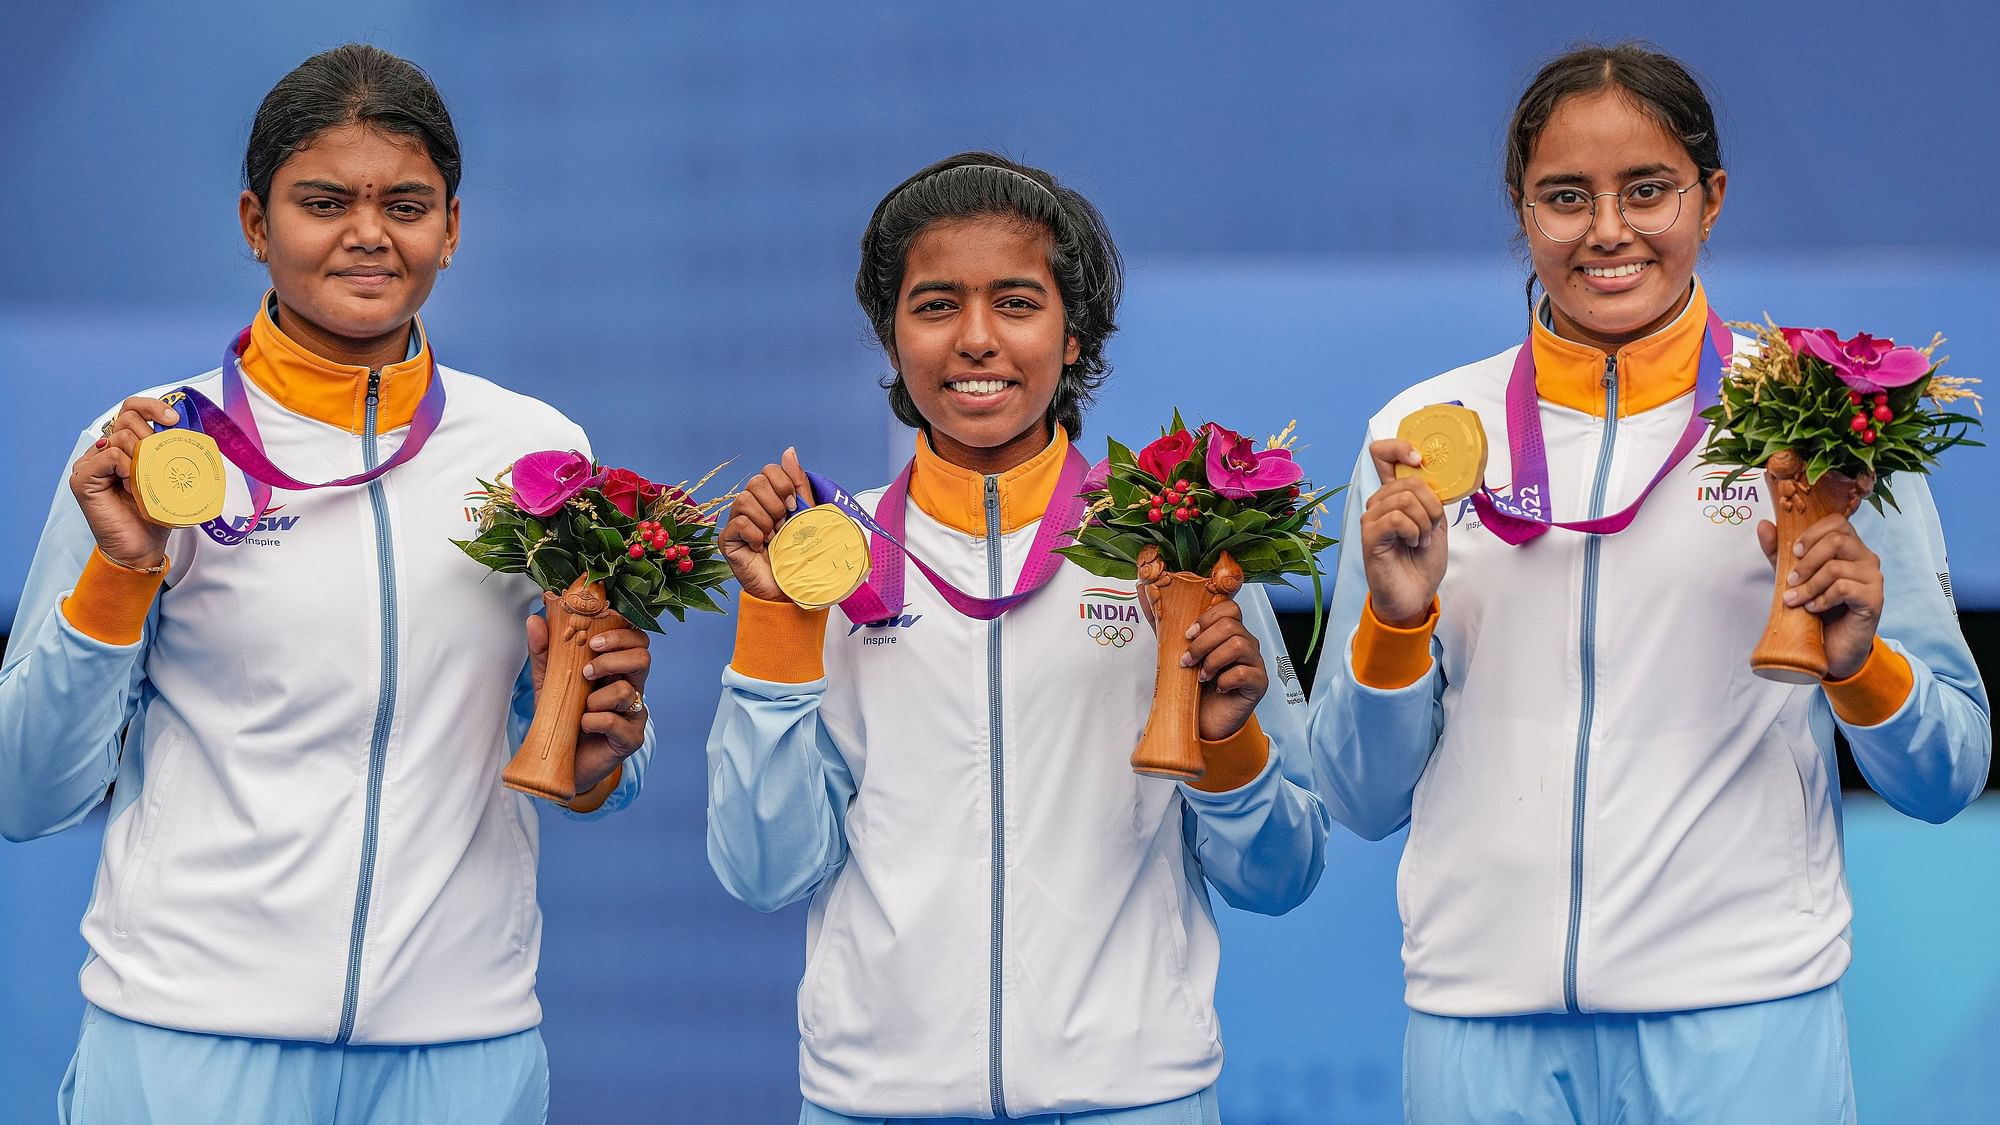 <div class="paragraphs"><p>Indian women's compound archery team wins gold at the Asian Games</p></div>